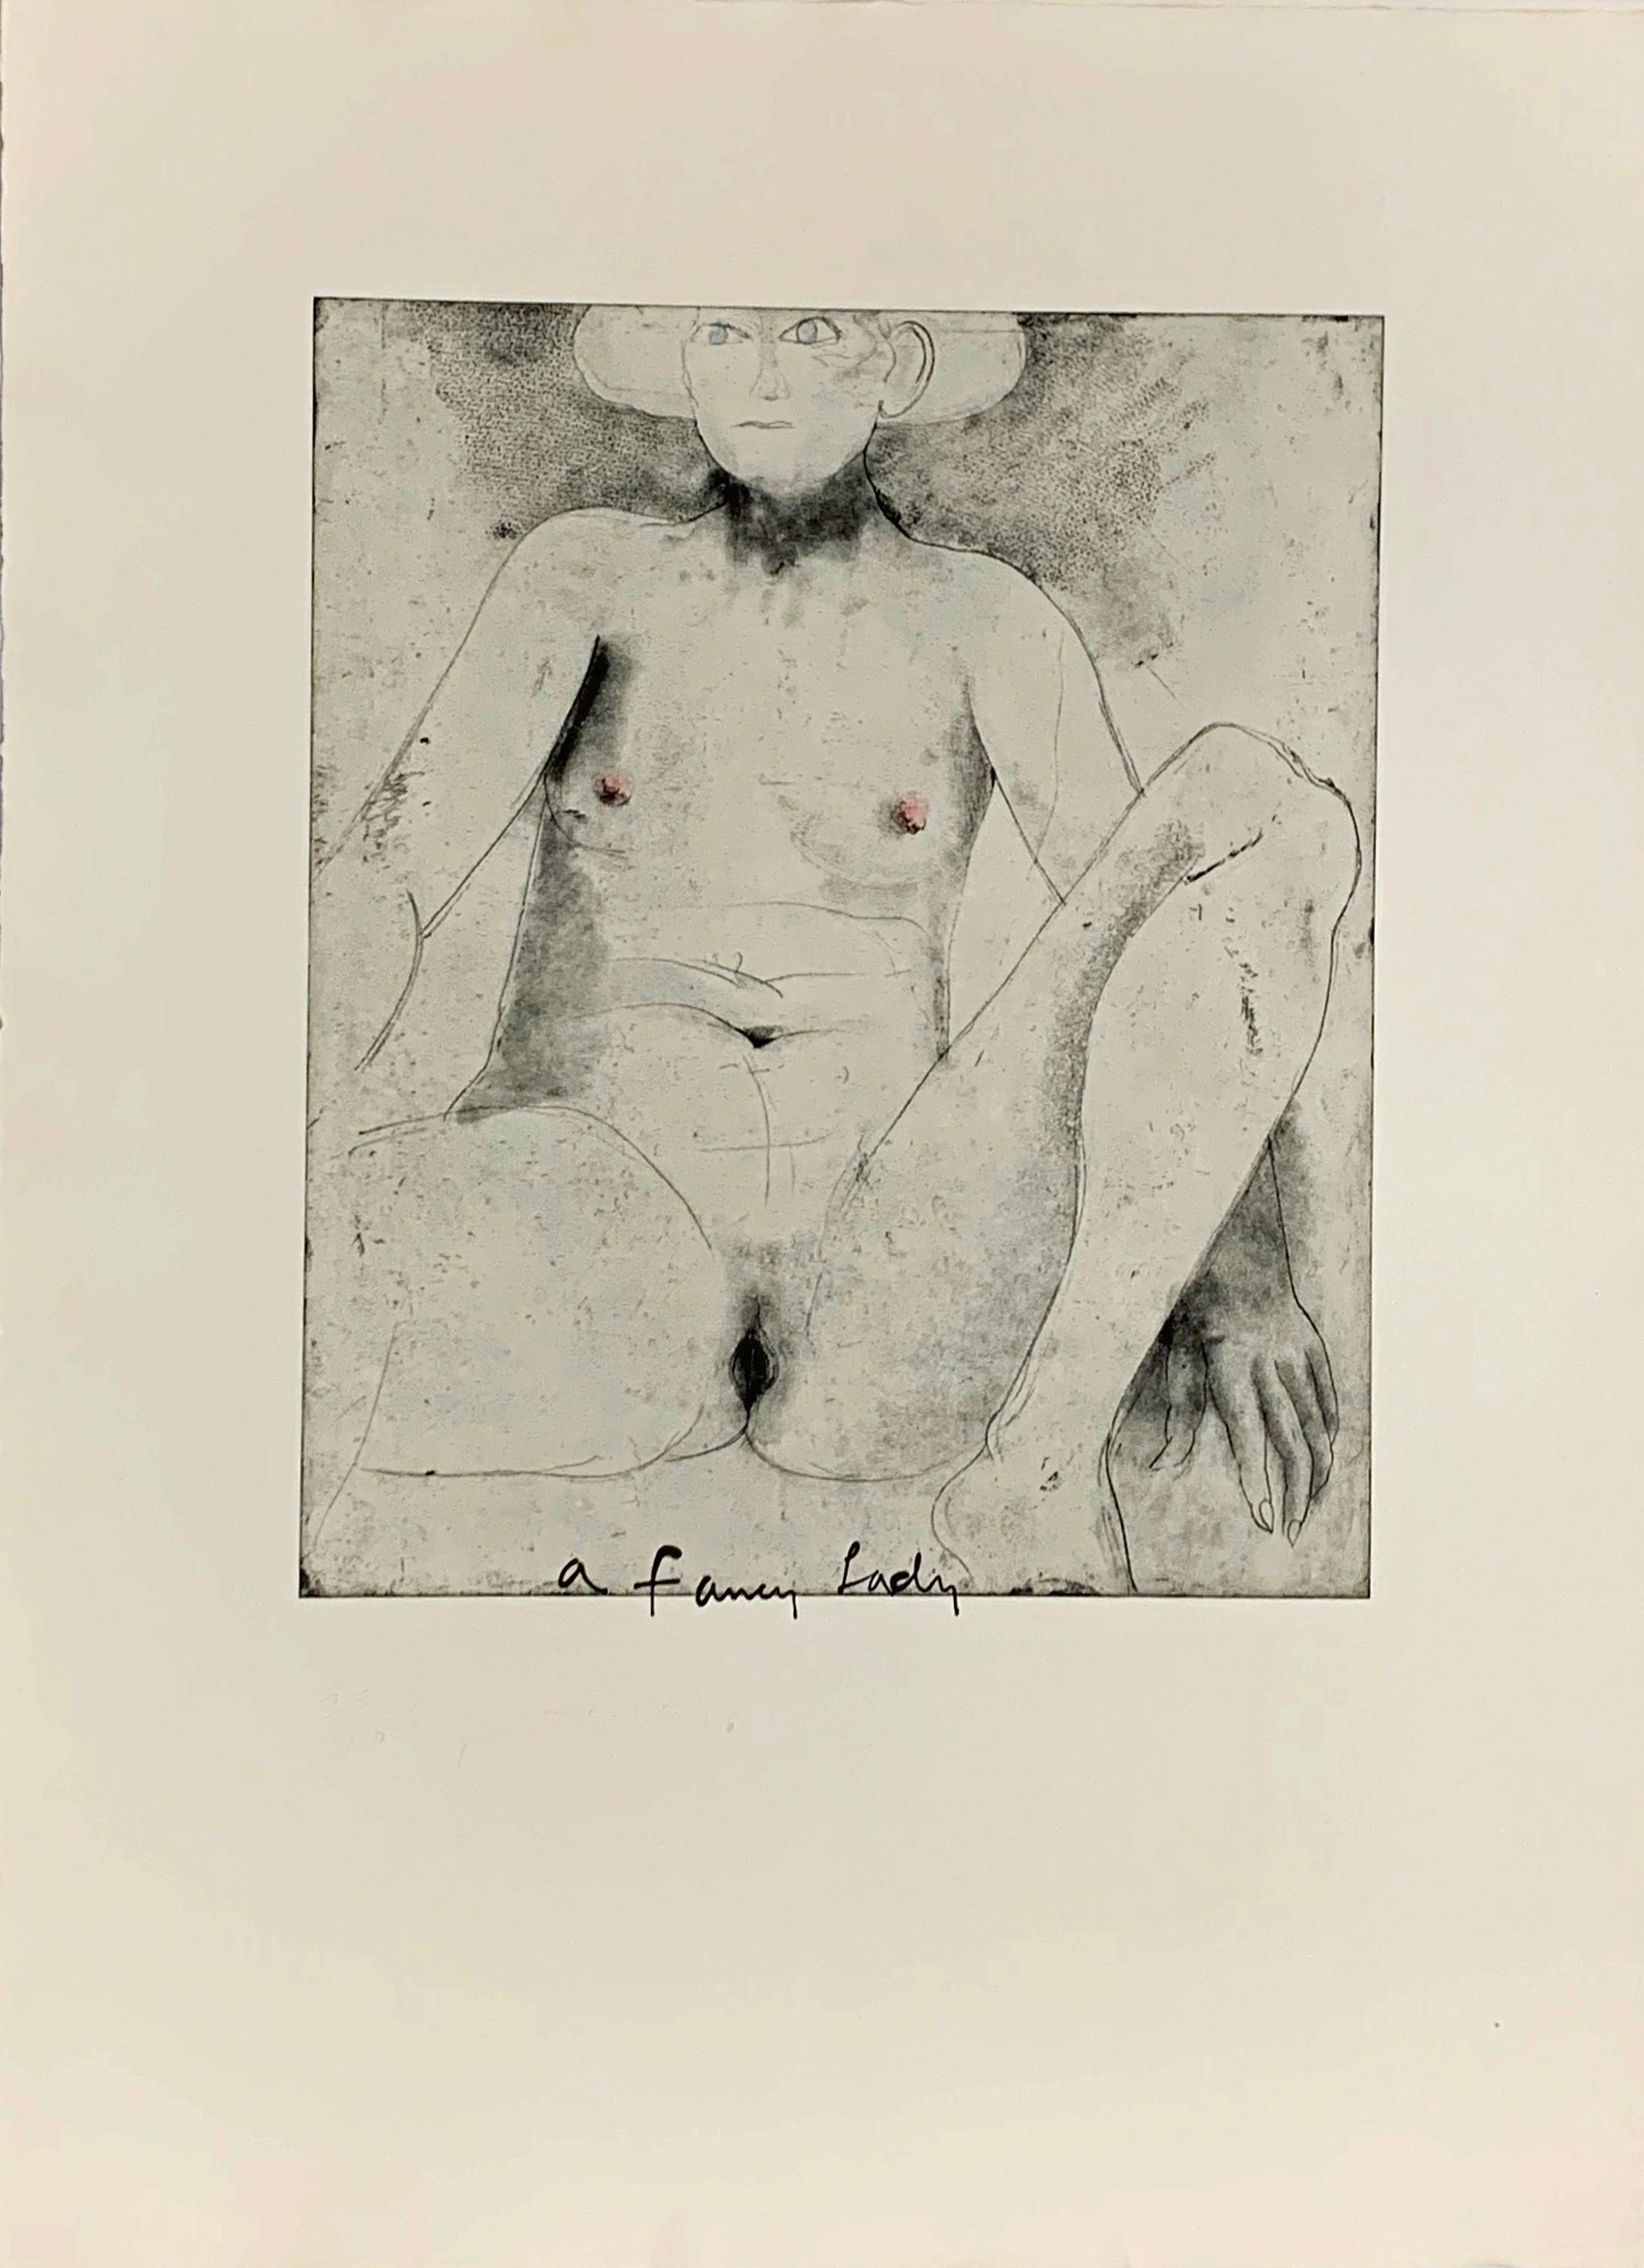 A FANCY LADY - Print by Jim Dine